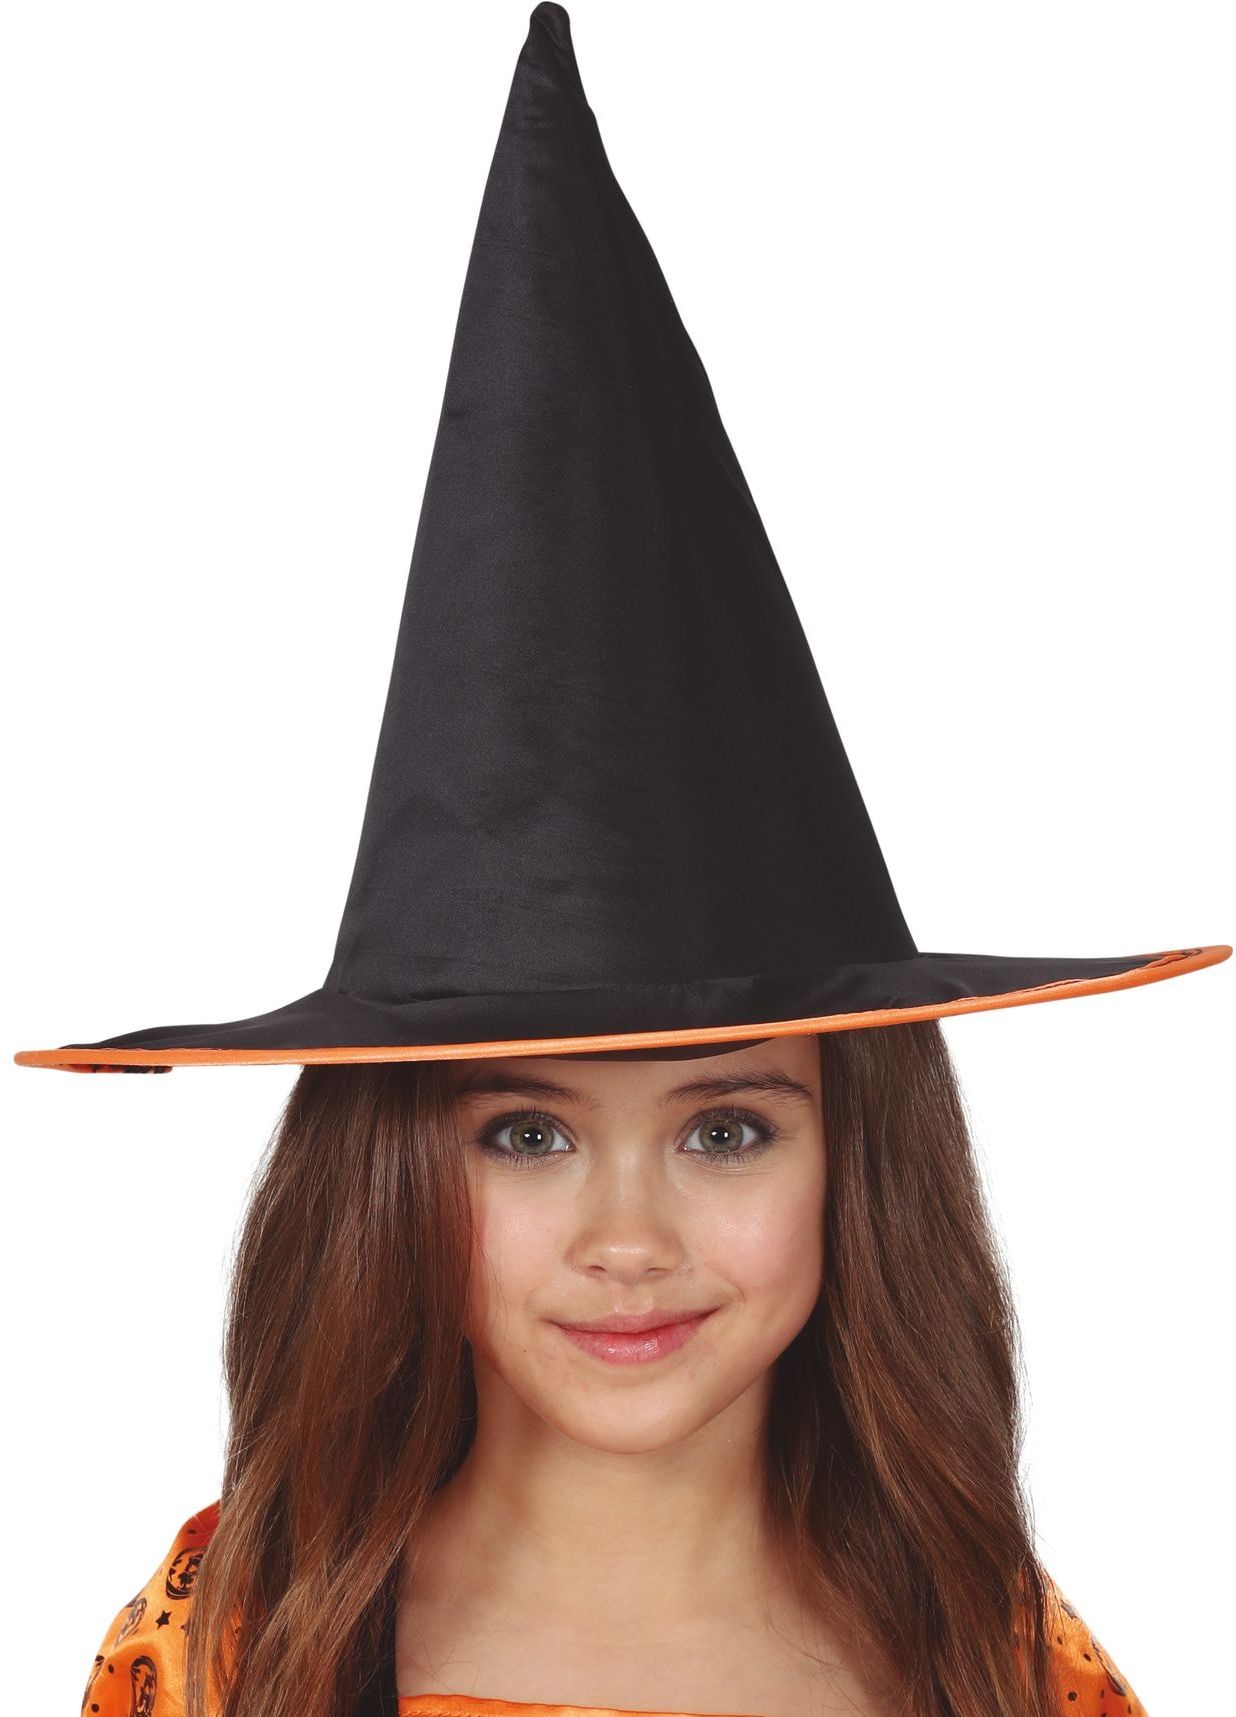 Heksen hoed kind met oranje rand